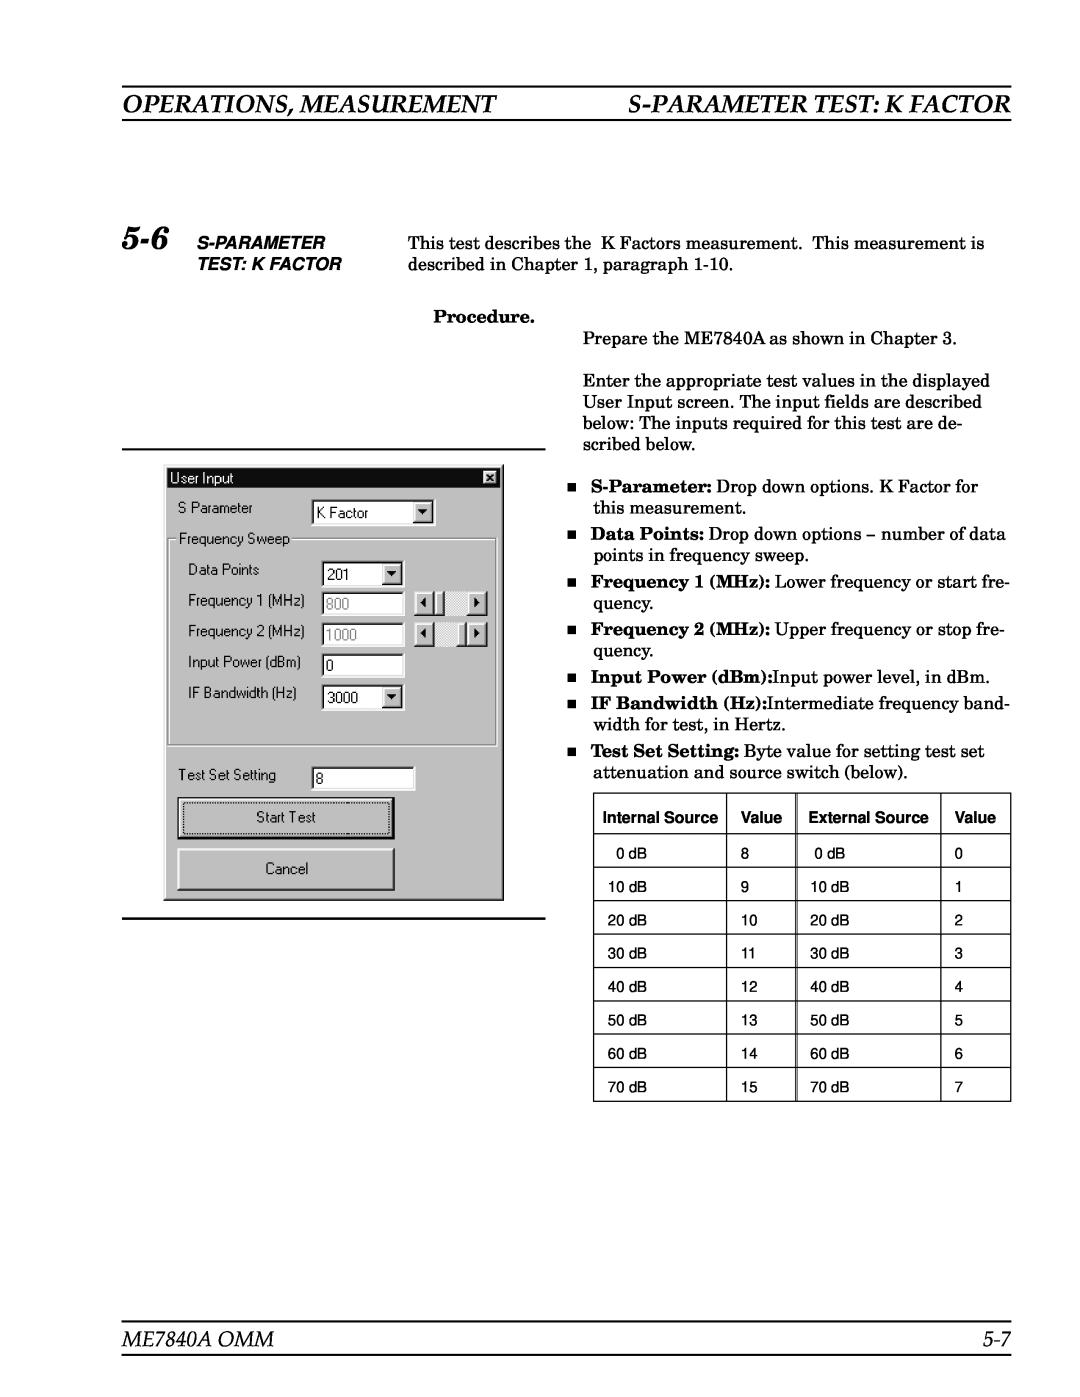 Anritsu manual S-Parametertest K Factor, Operations, Measurement, ME7840A OMM, Test K Factor, Procedure 